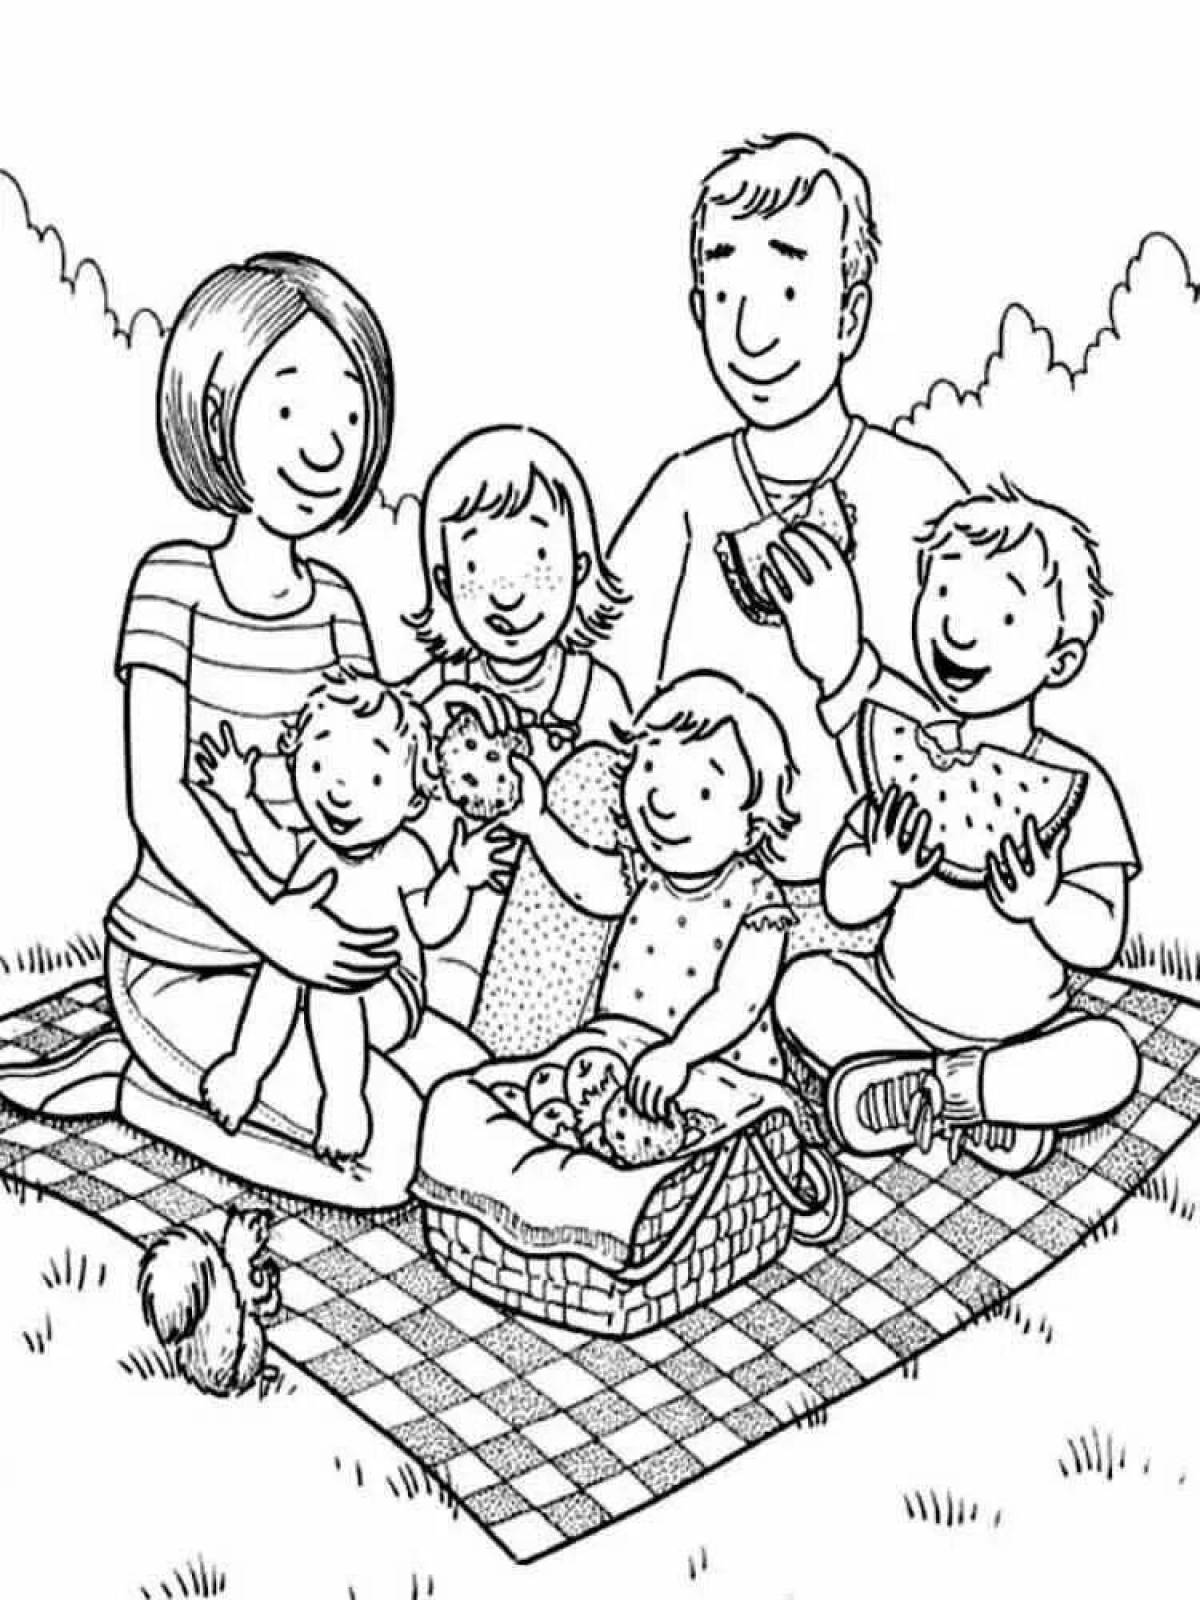 Joyful family drawing page